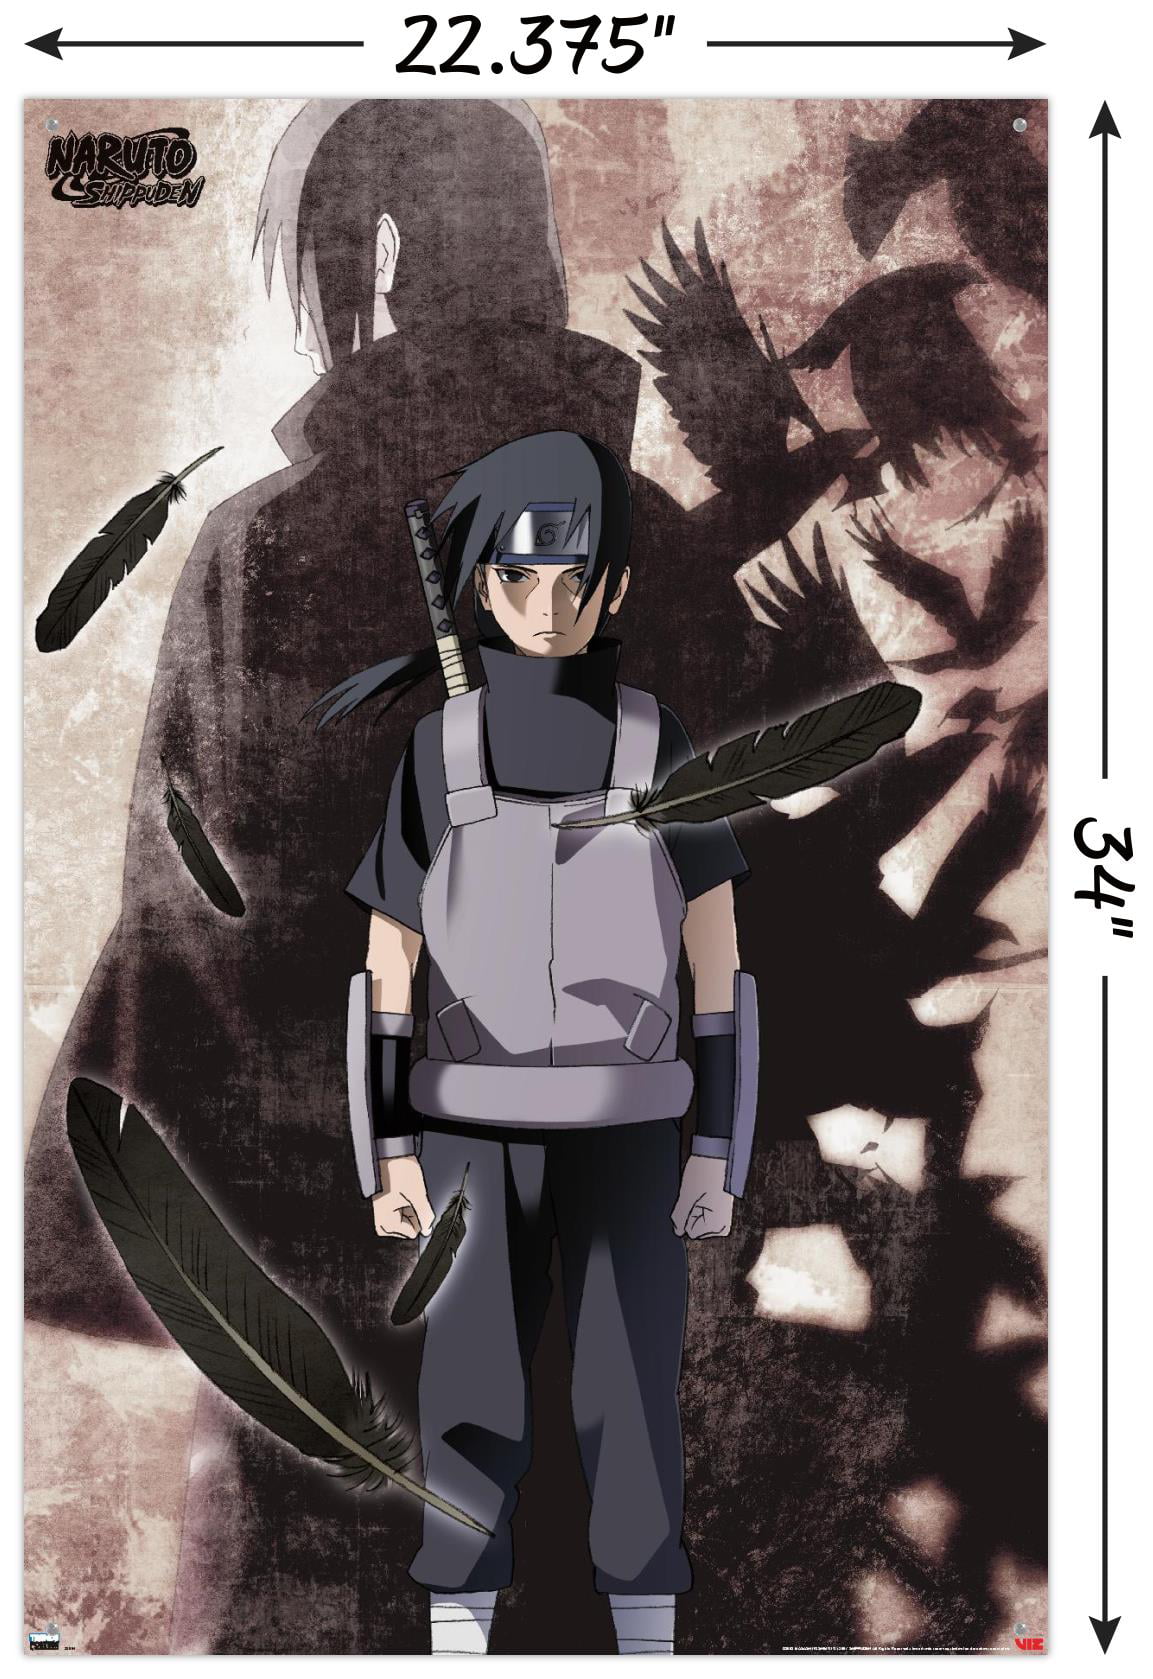 Naruto Shippuden Art Poster 2 Set - Anime and Manga